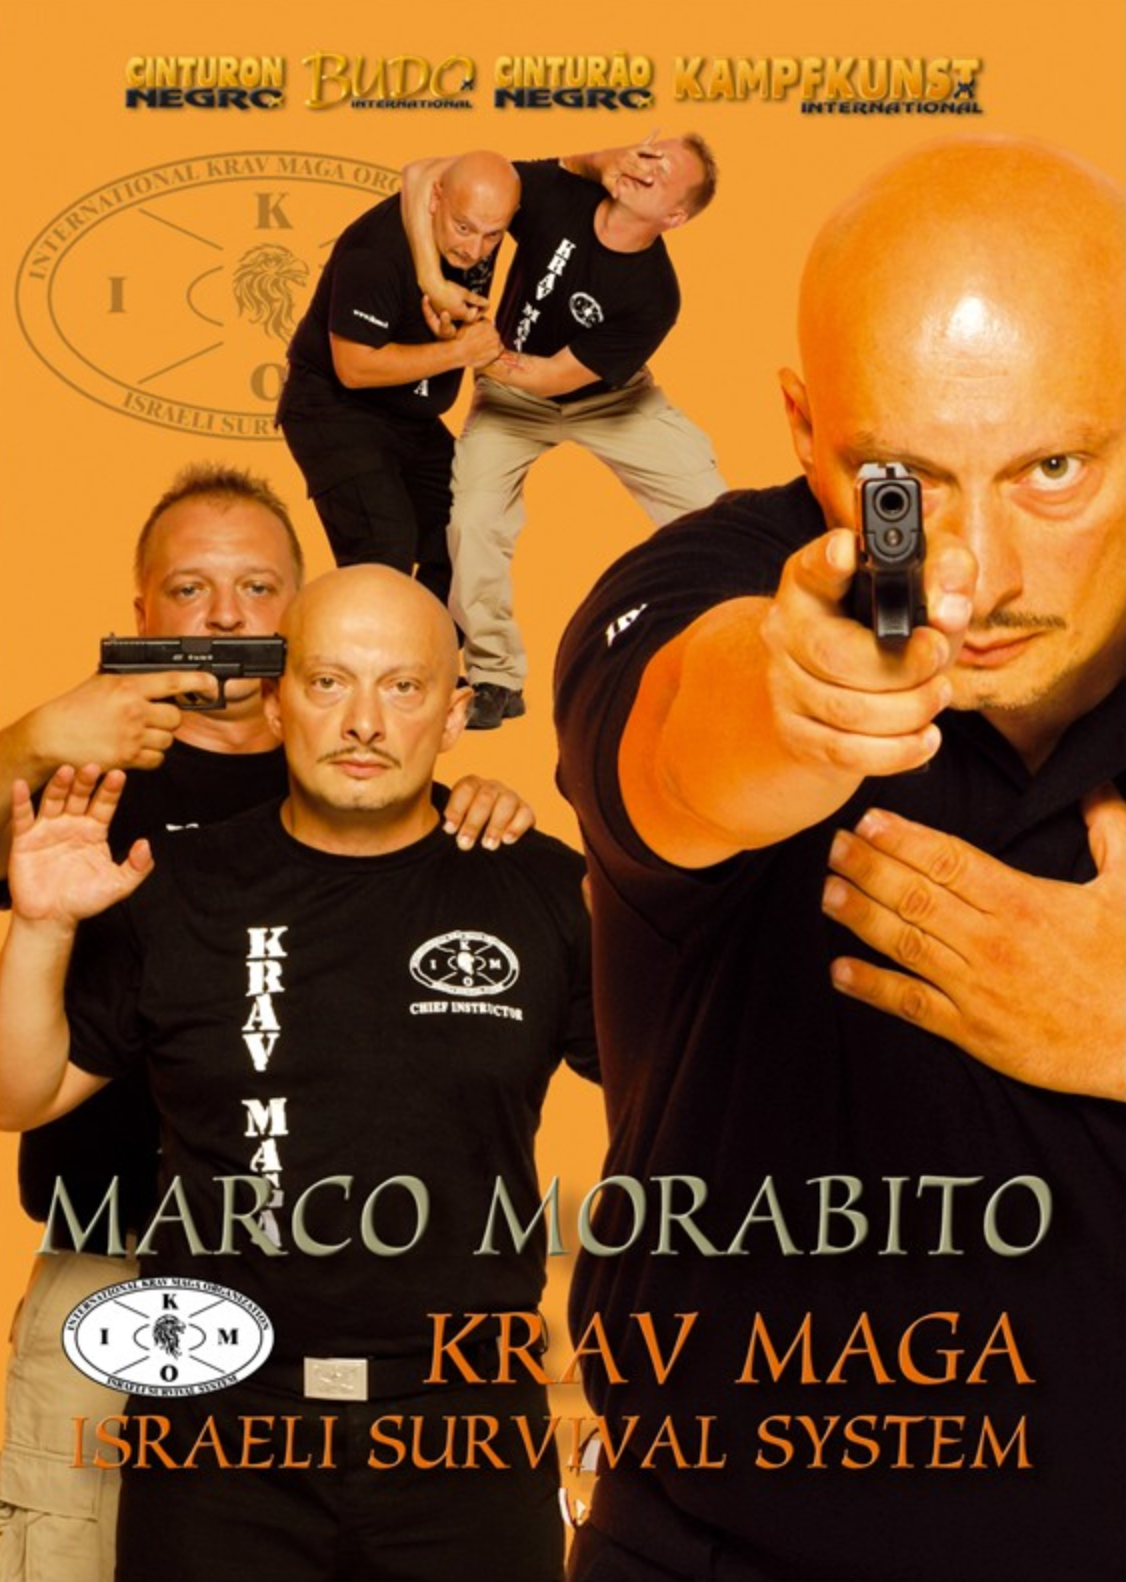 Krav Maga Israeli Survival System. Hand to Hand Combat DVD with Marco Morabito - Budovideos Inc